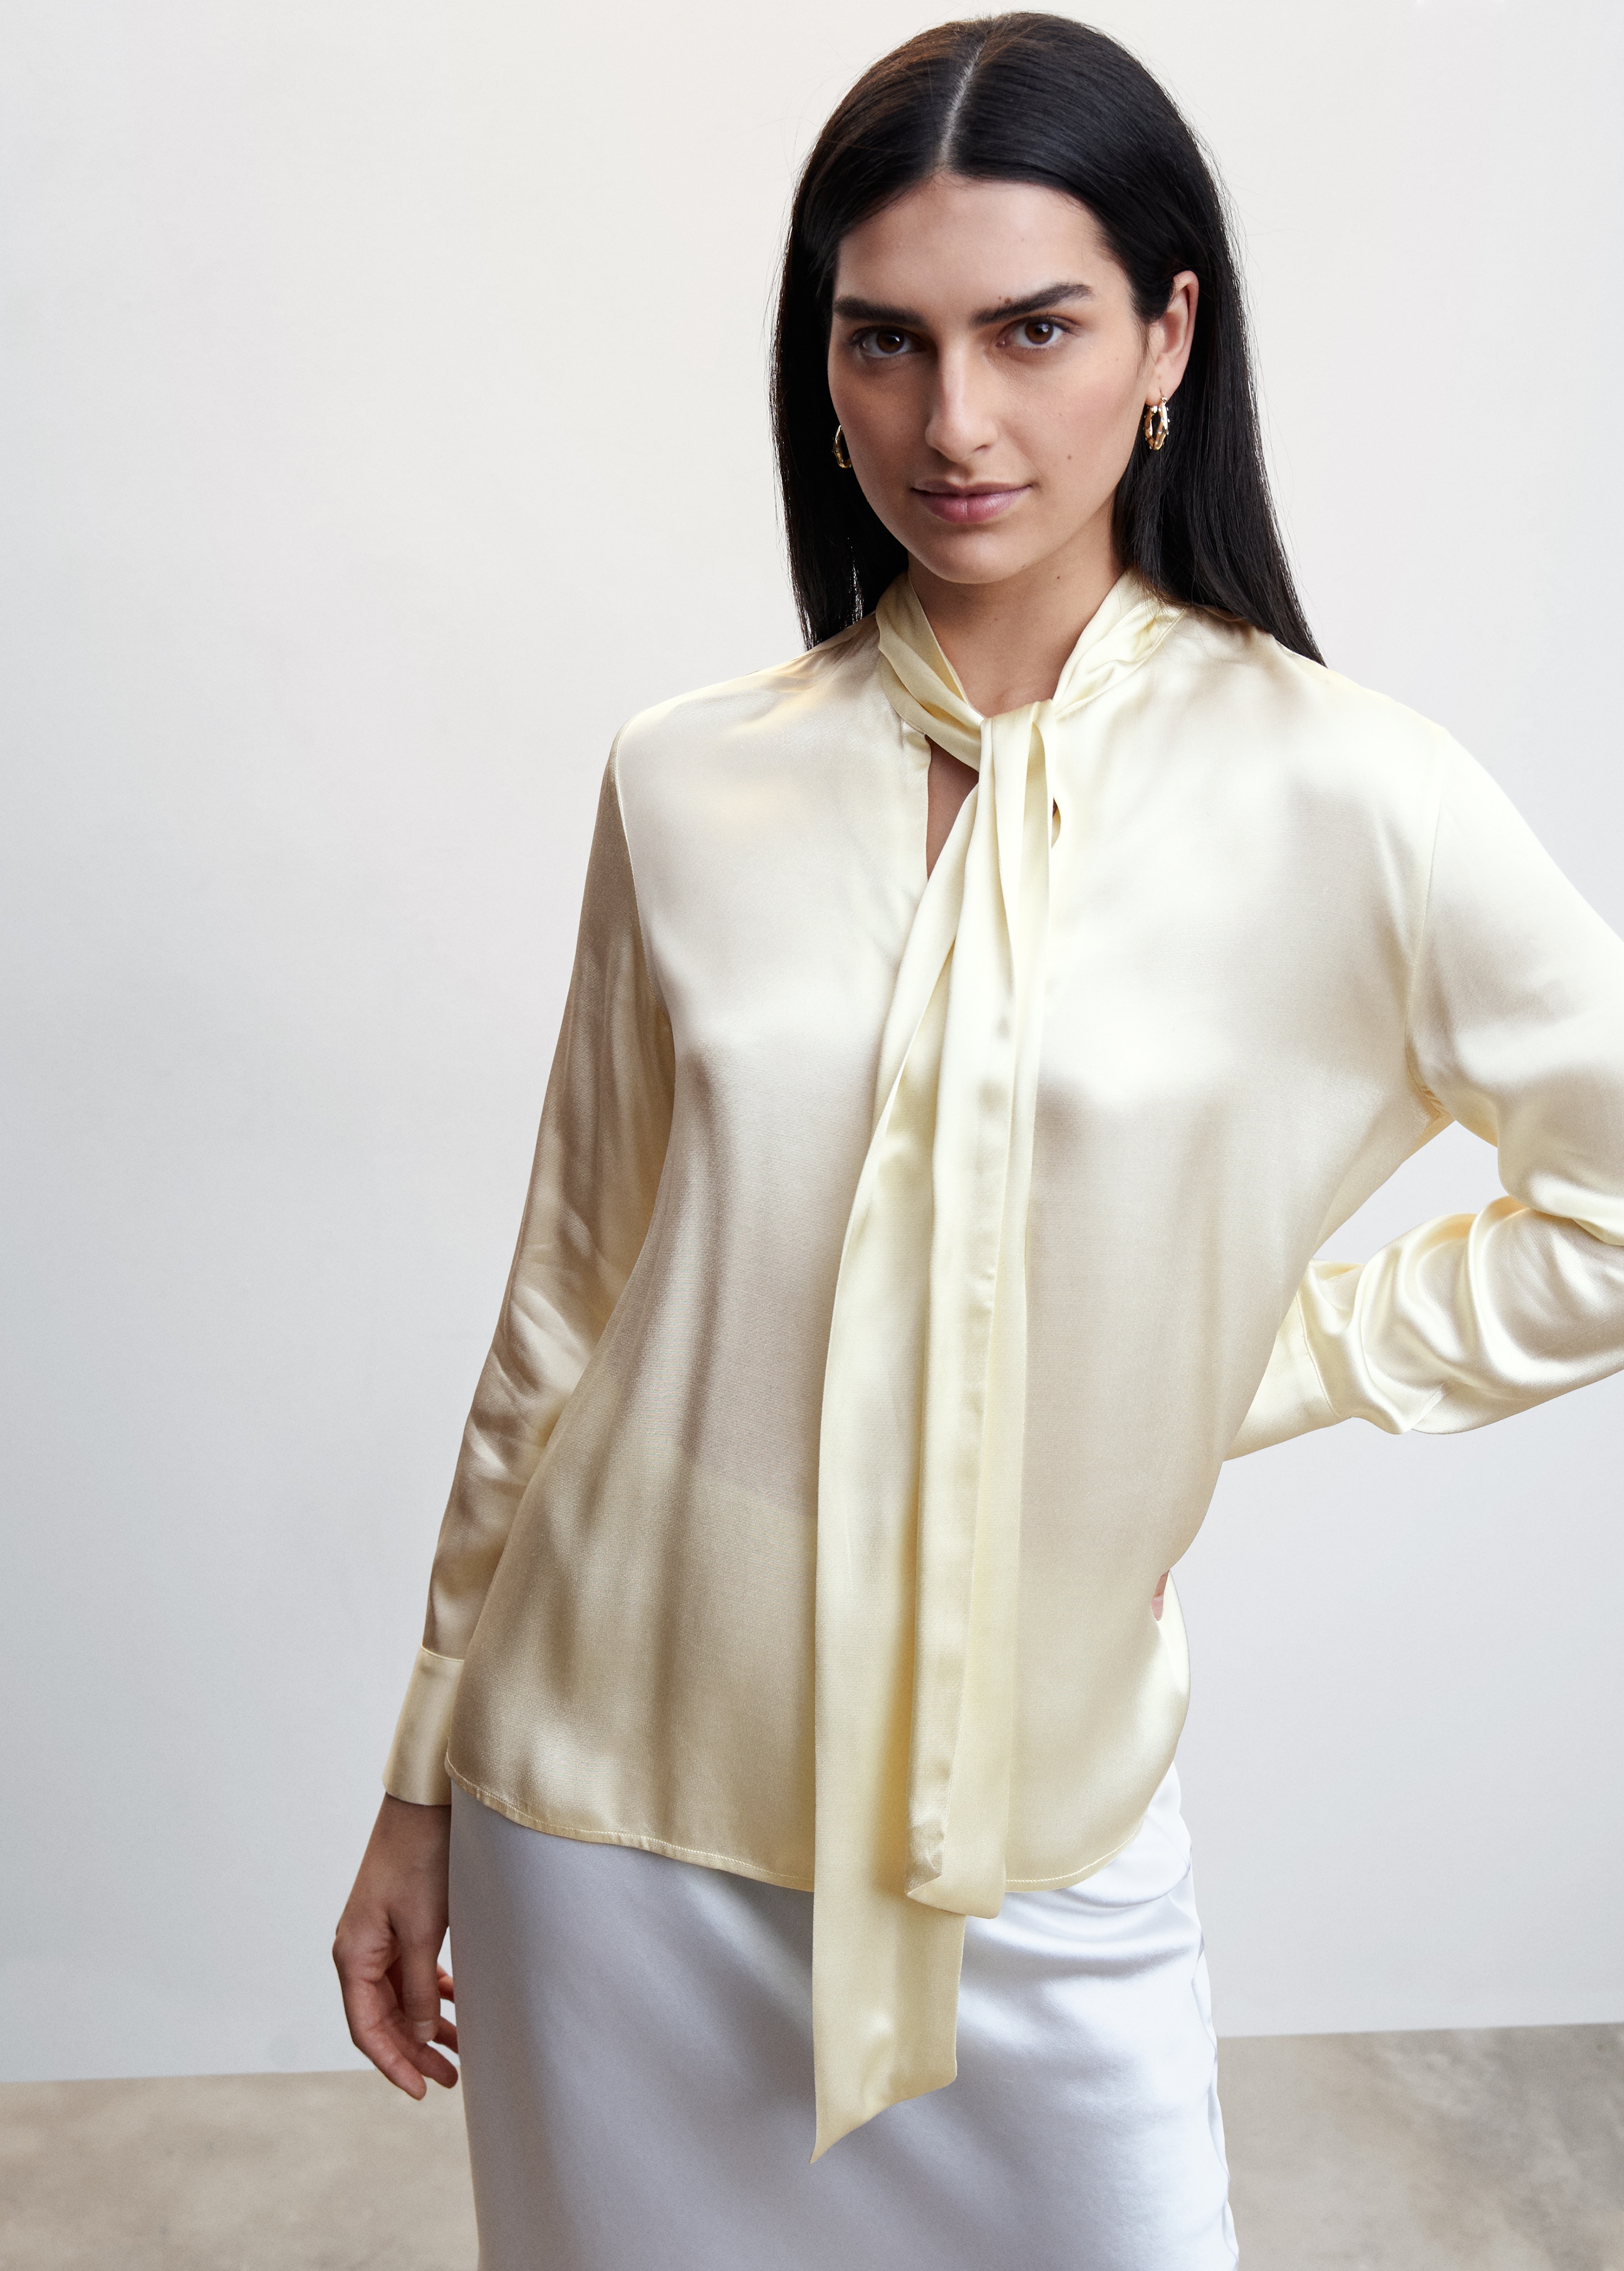 Satin blouse with bow collar - Medium plane